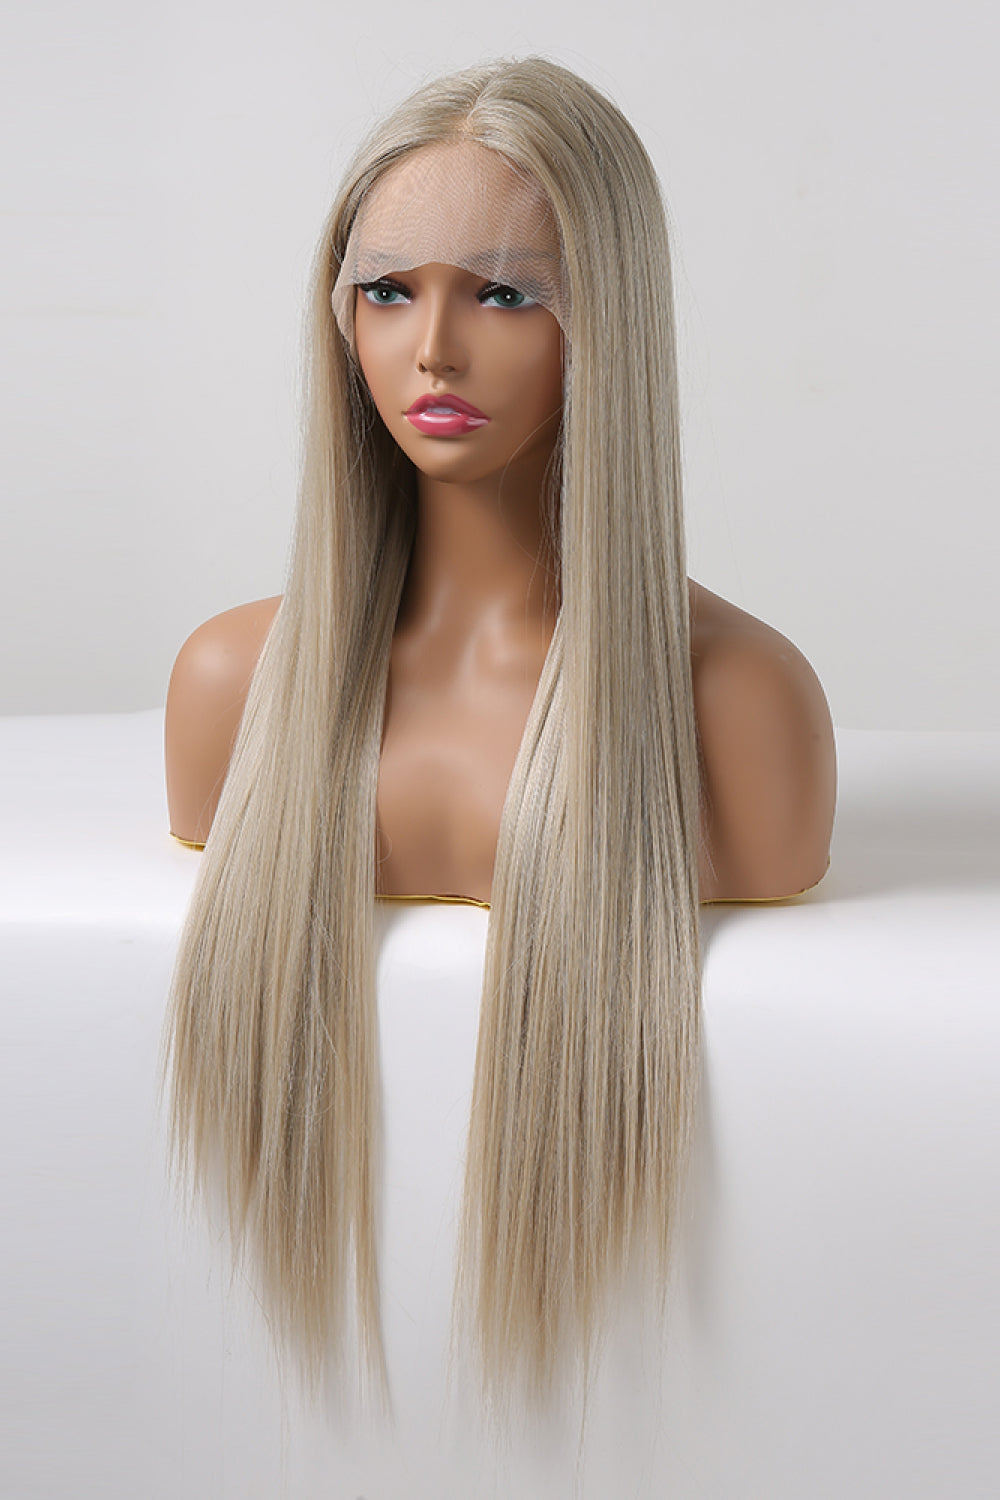 Gray Senorita 13*2" Lace Front Wigs Synthetic Long Straight 27" 150% Density- Ash Blonde Wigs